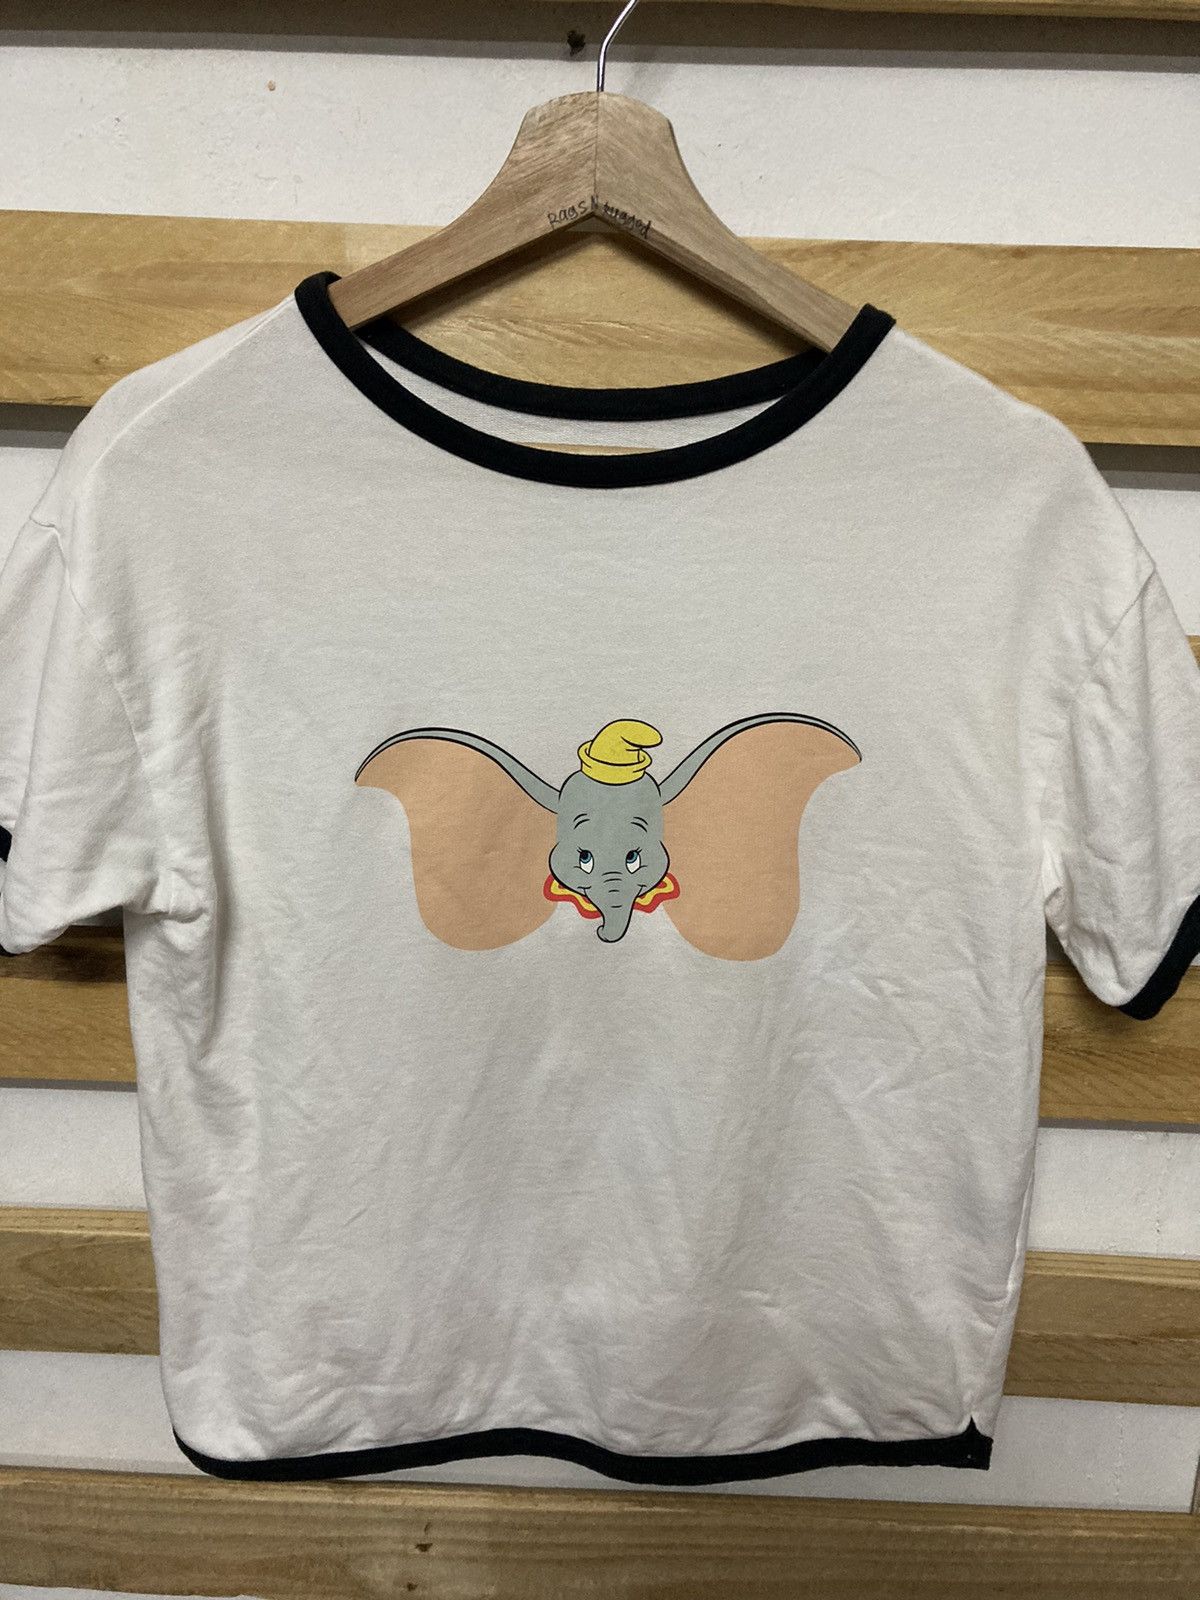 GU x Undercover Disney Dumbo Ringer Tshirt - 3